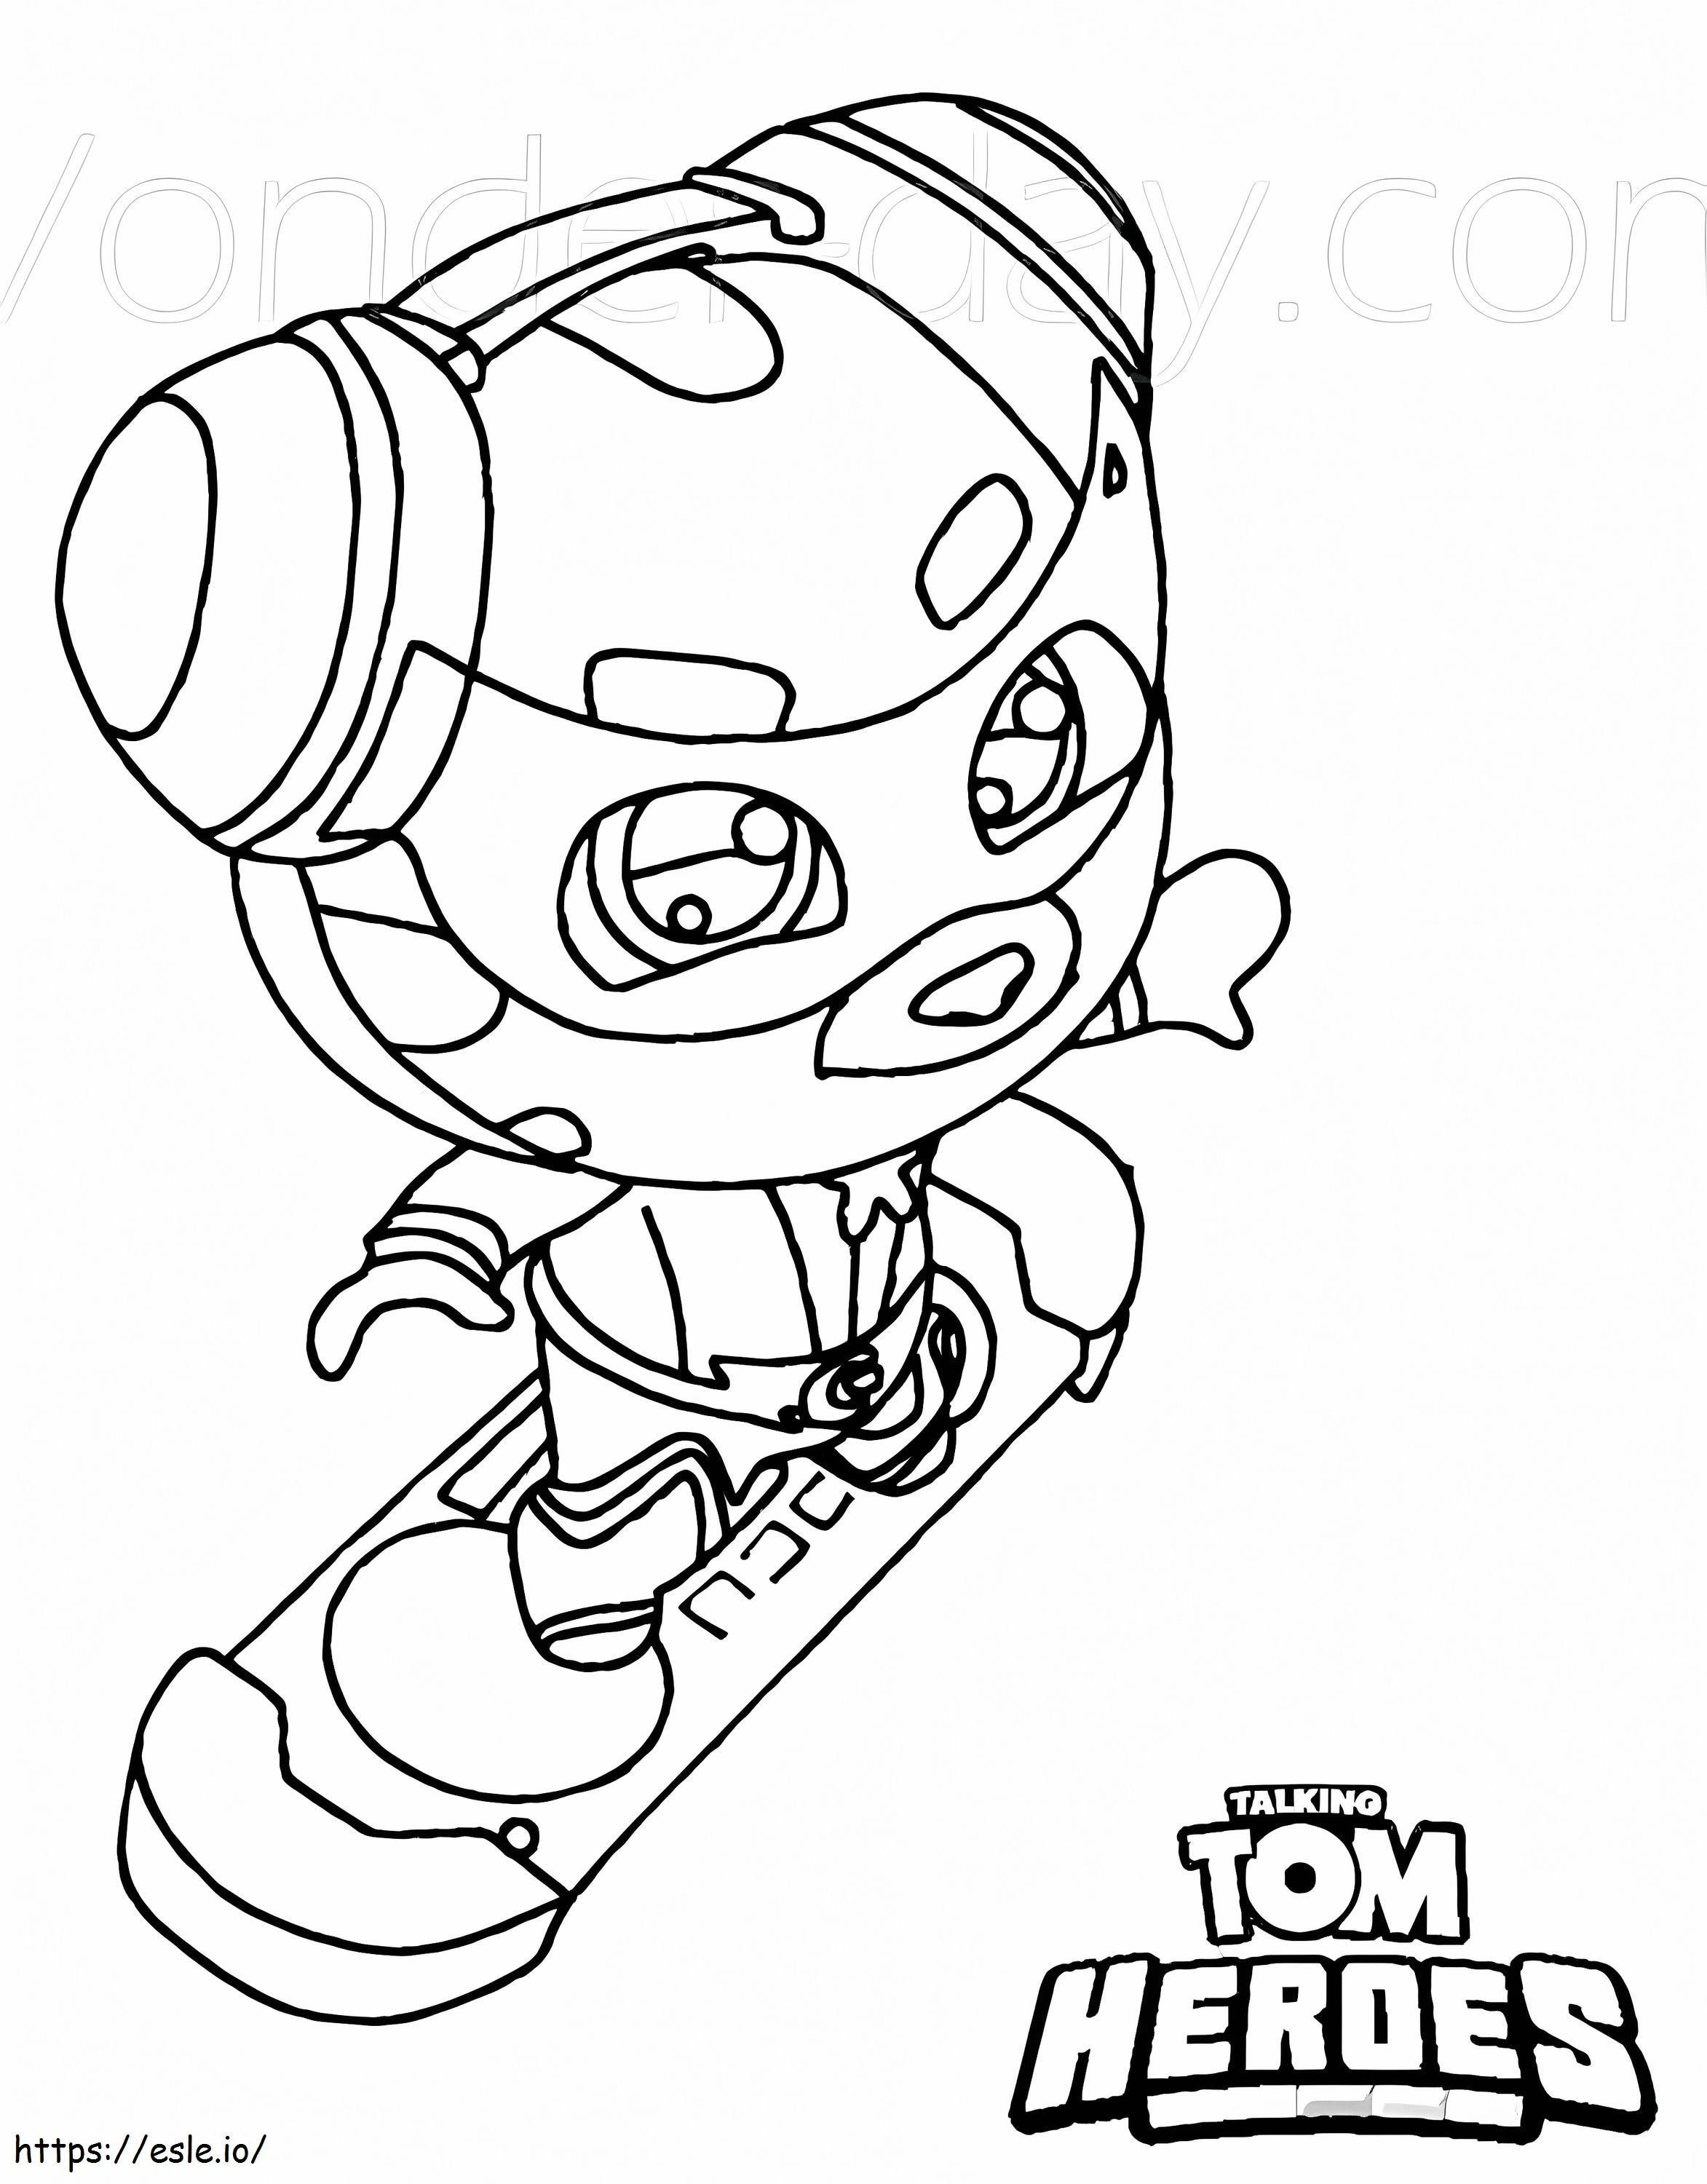 Coloriage Gingembre de Talking Tom Heroes à imprimer dessin